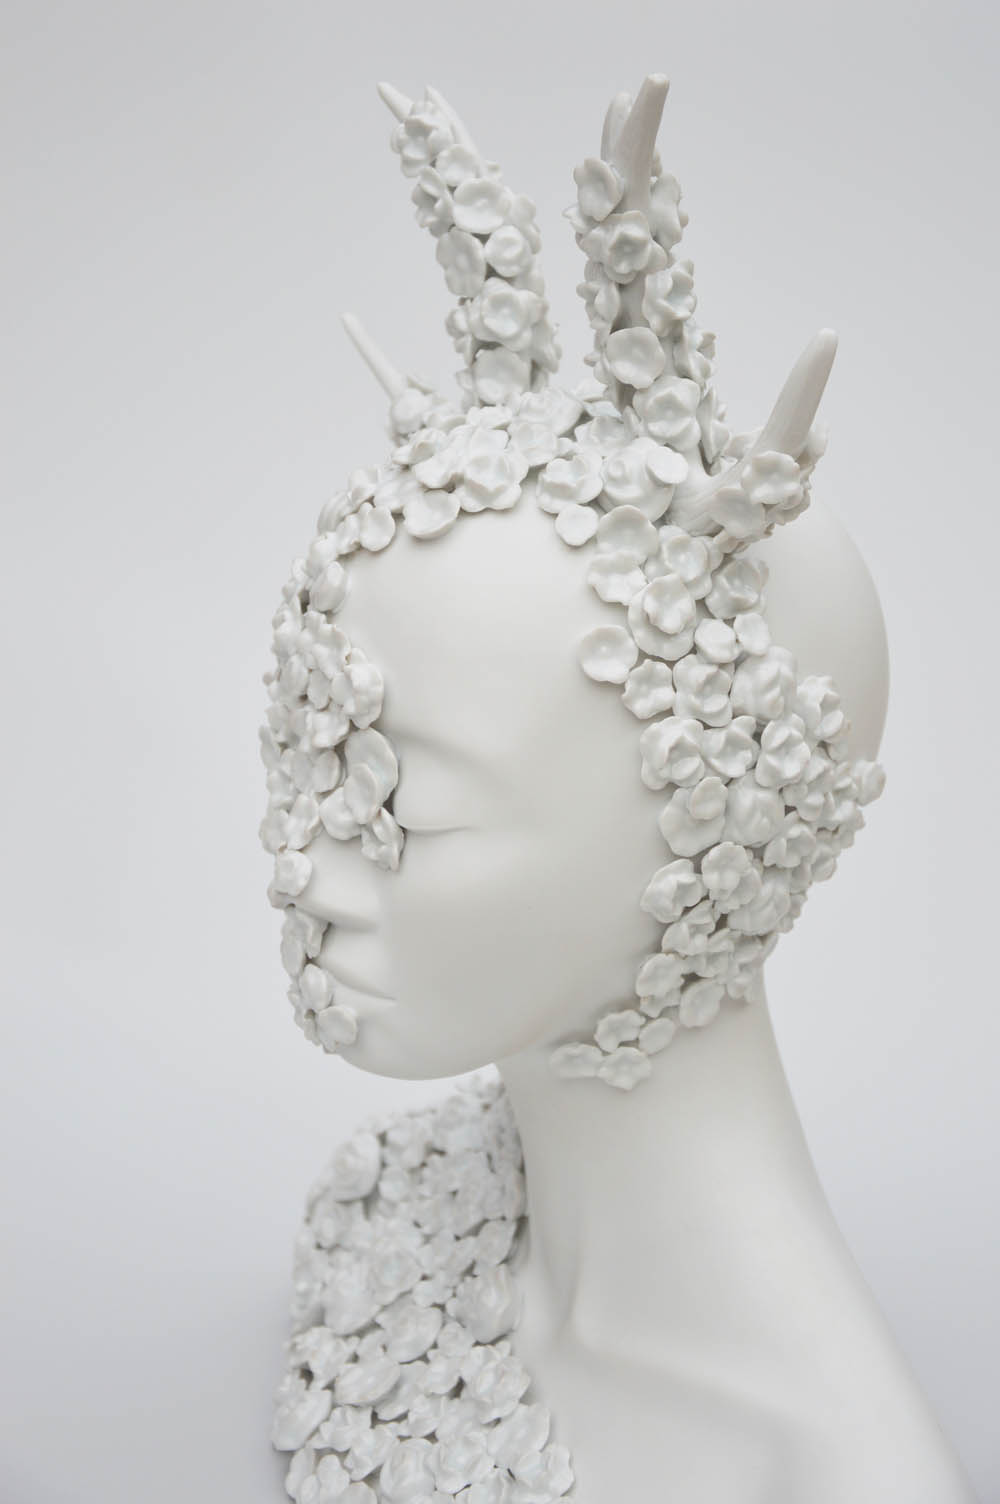 horn porcelain sculptures by juliette clovis